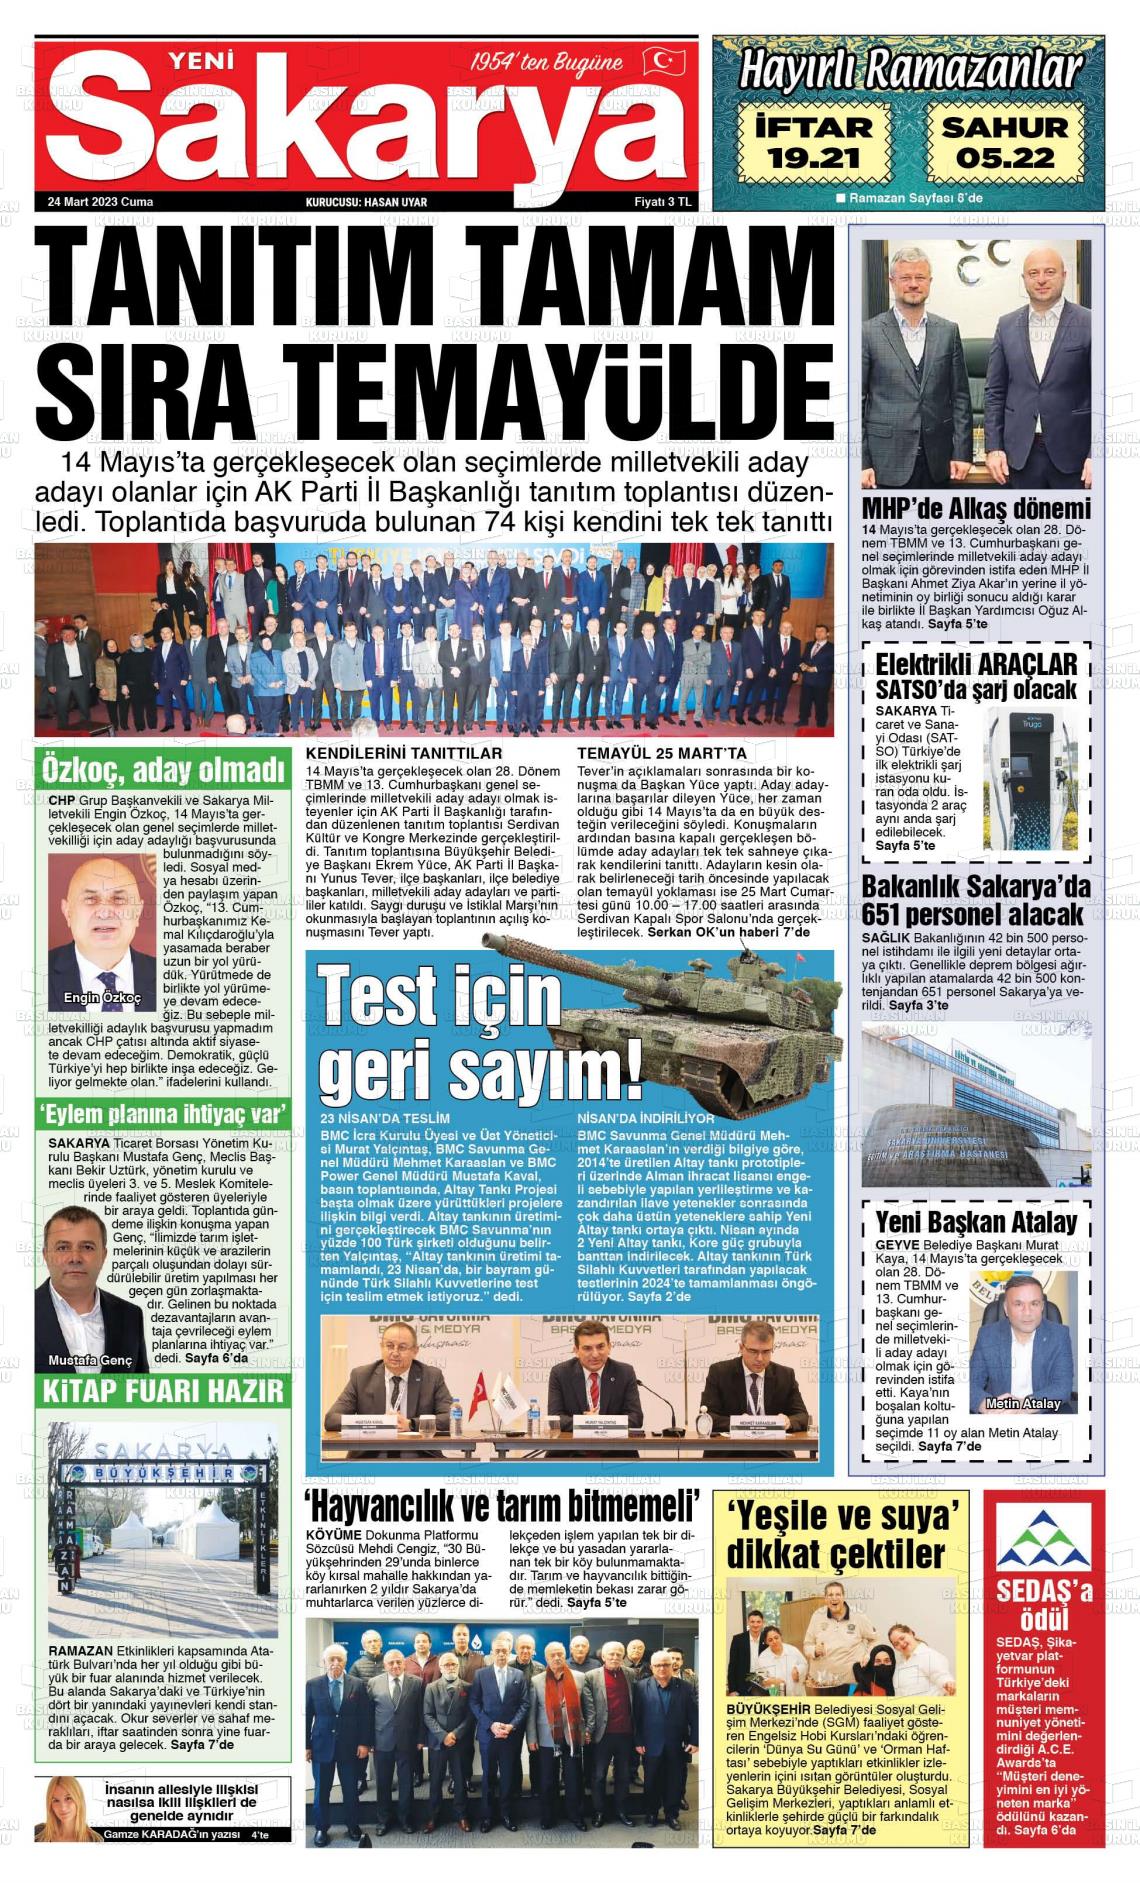 24 Mart 2023 Yeni Sakarya Gazete Manşeti